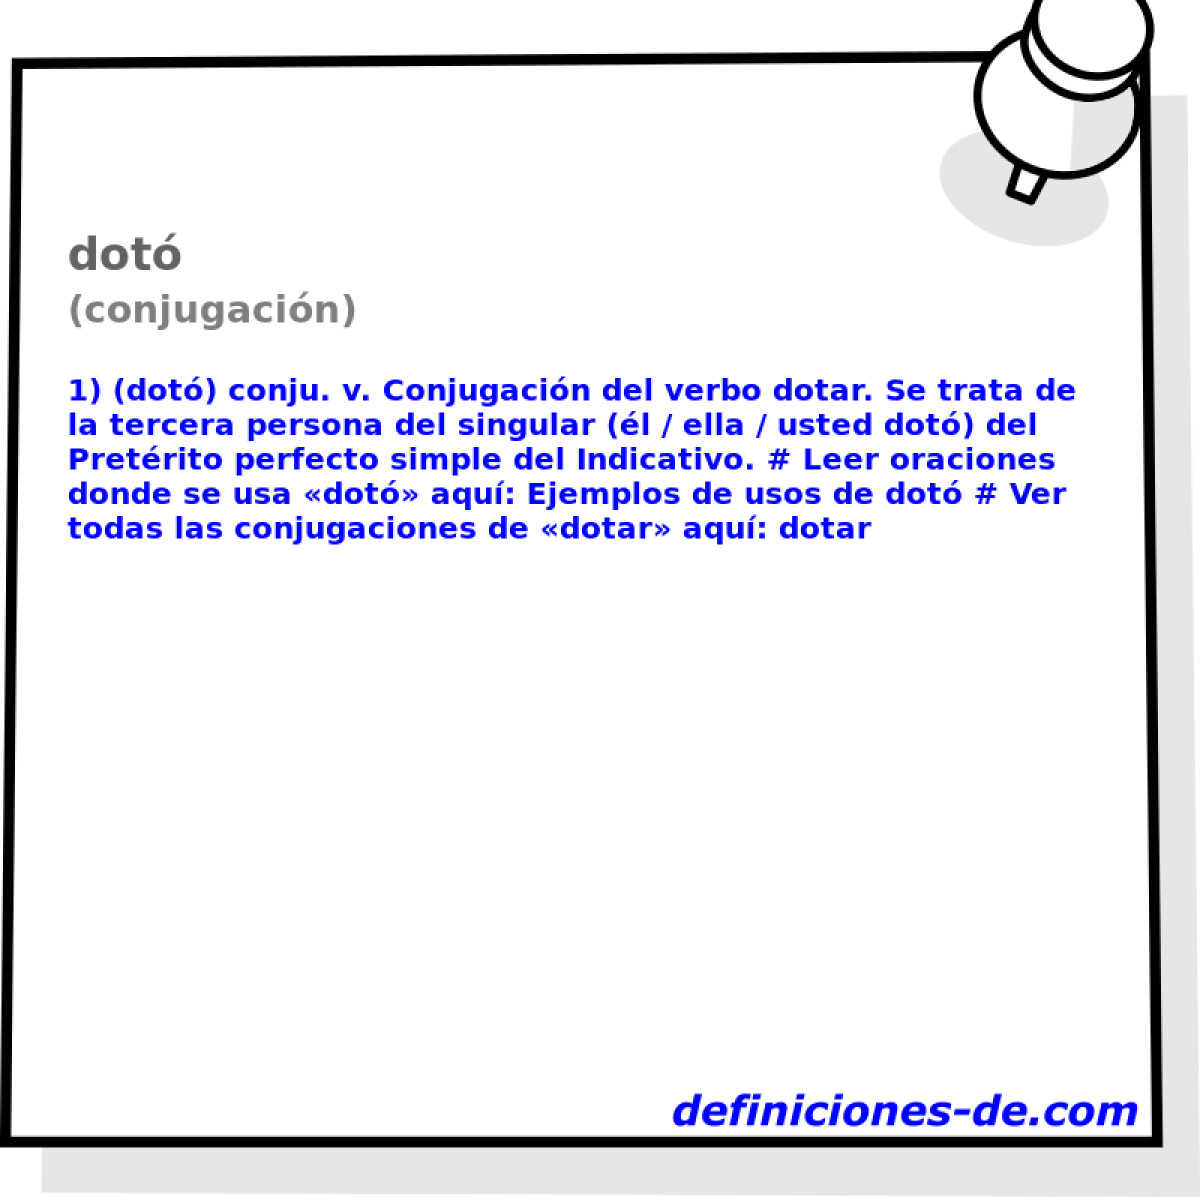 dot (conjugacin)